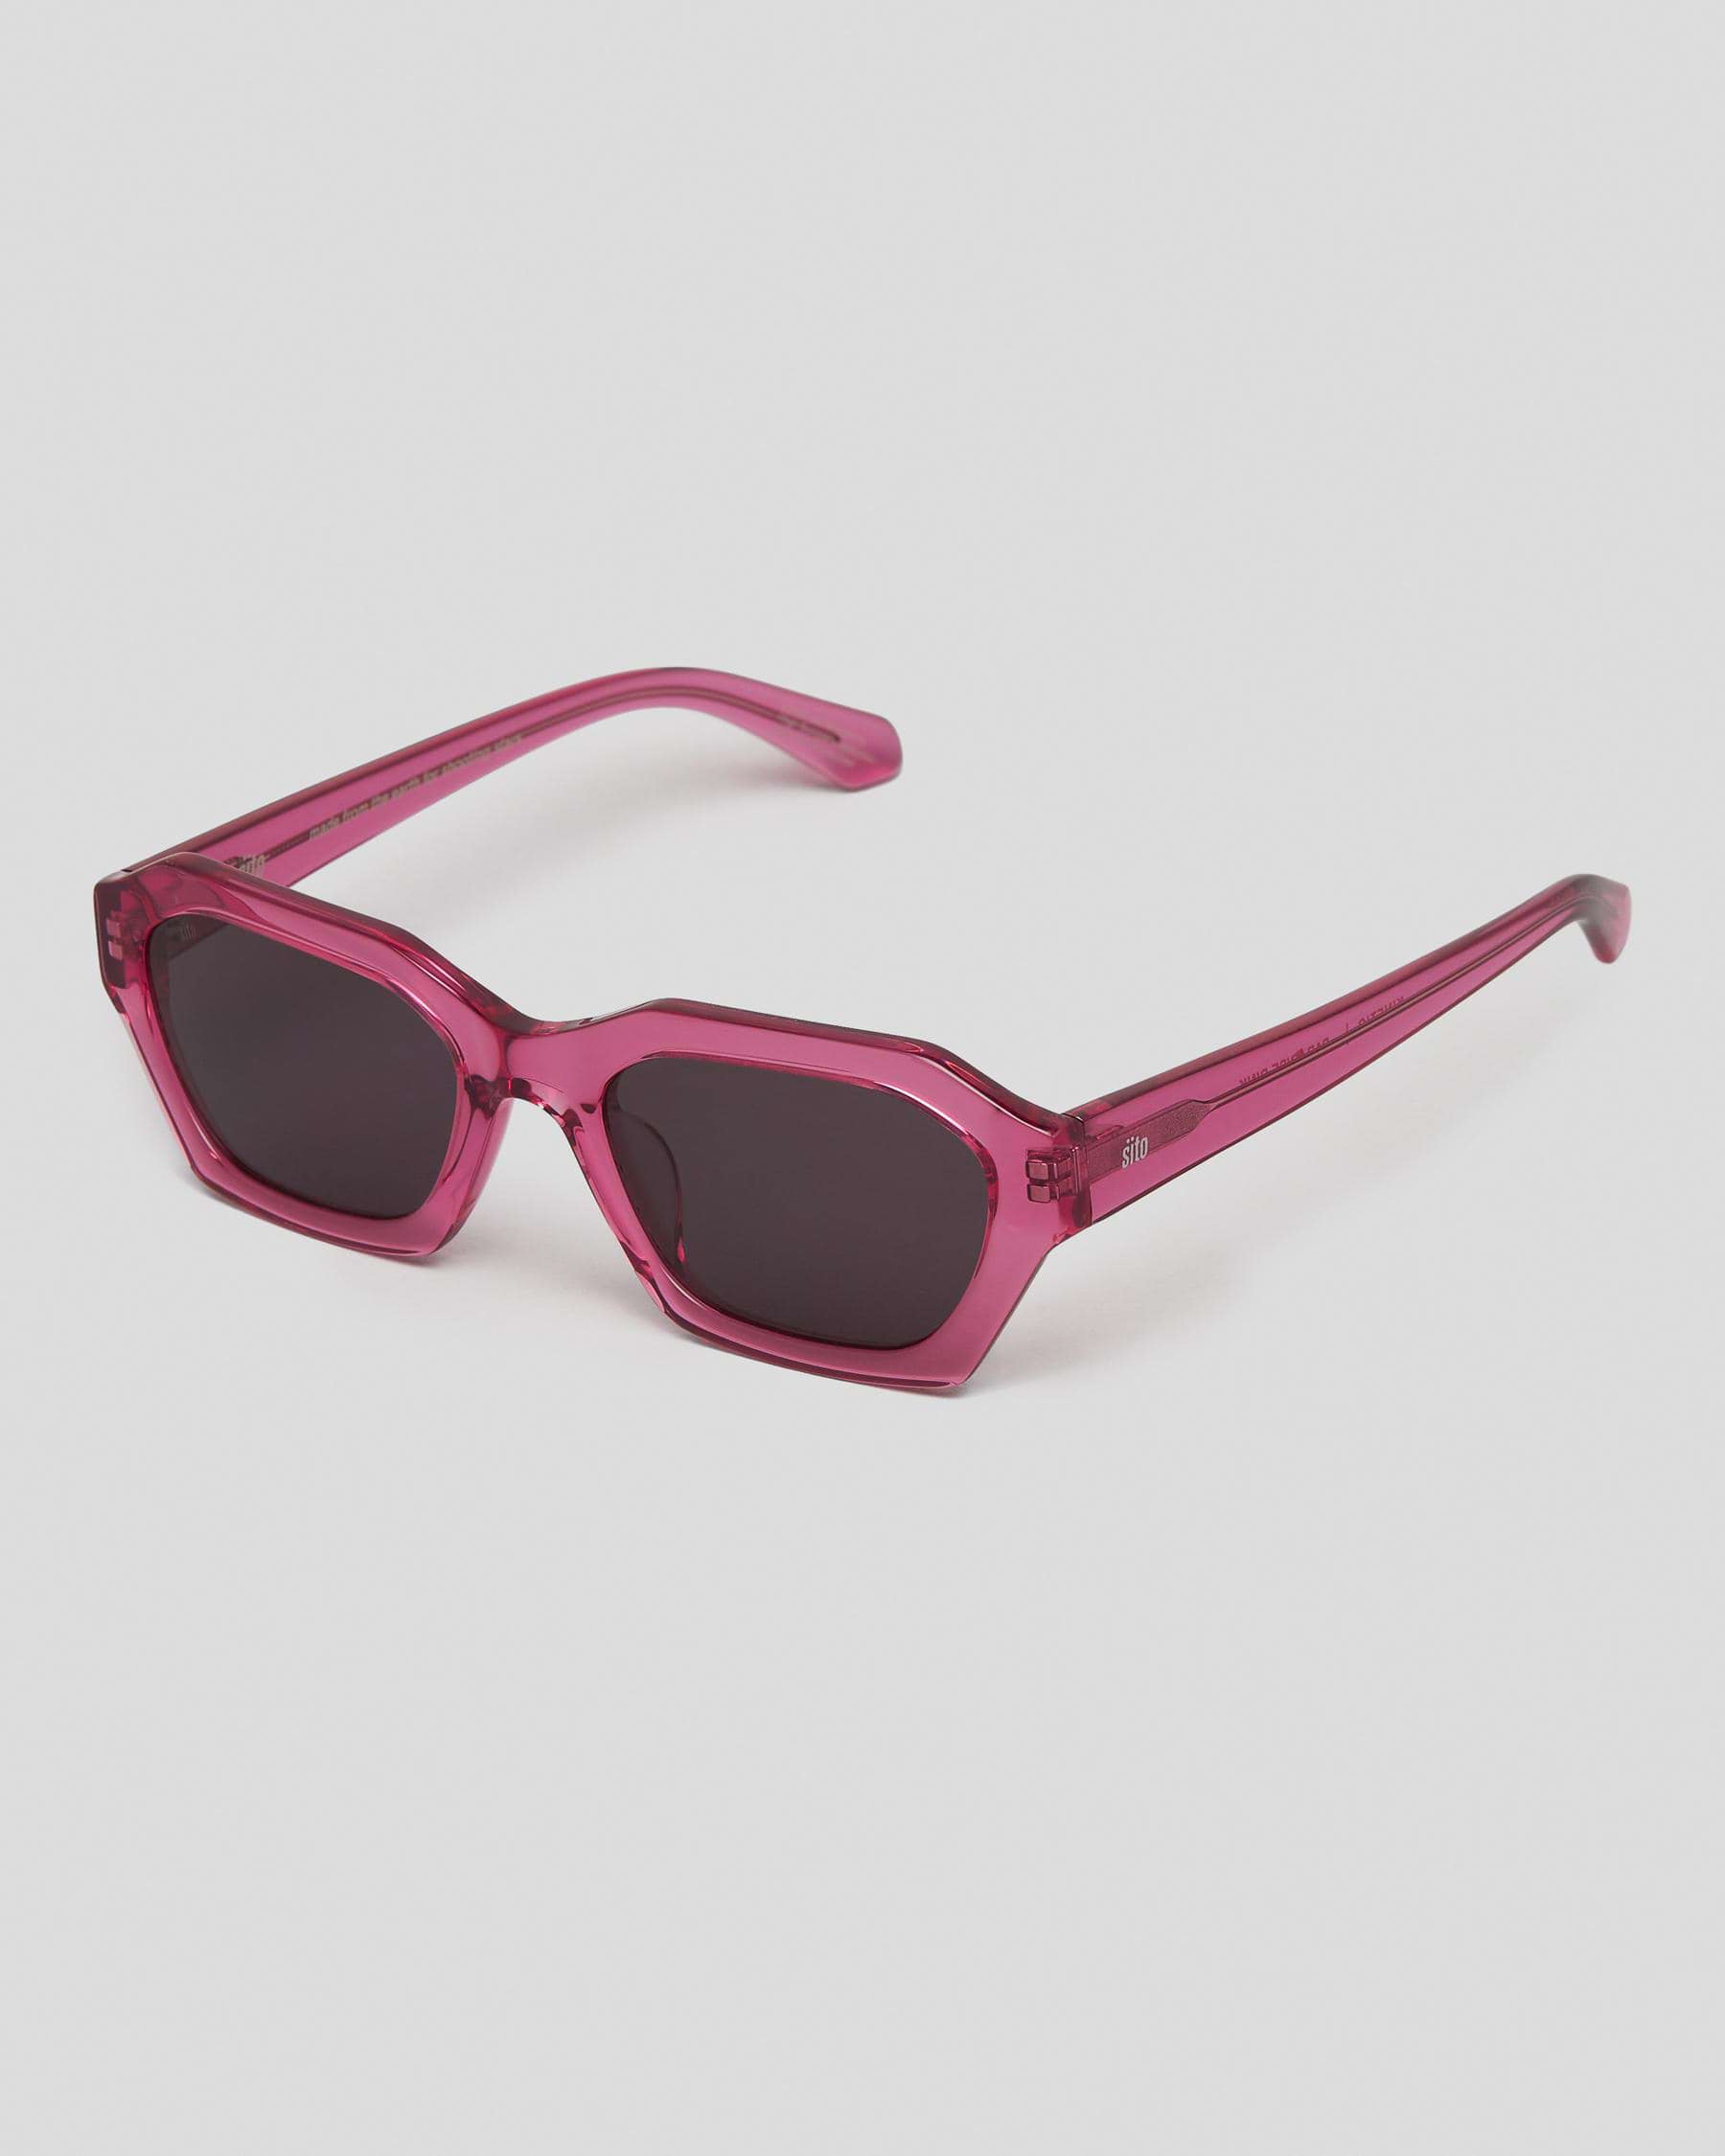 Sito Kinetic Sunglasses In Paradise Pink/smokey Grey - FREE* Shipping ...